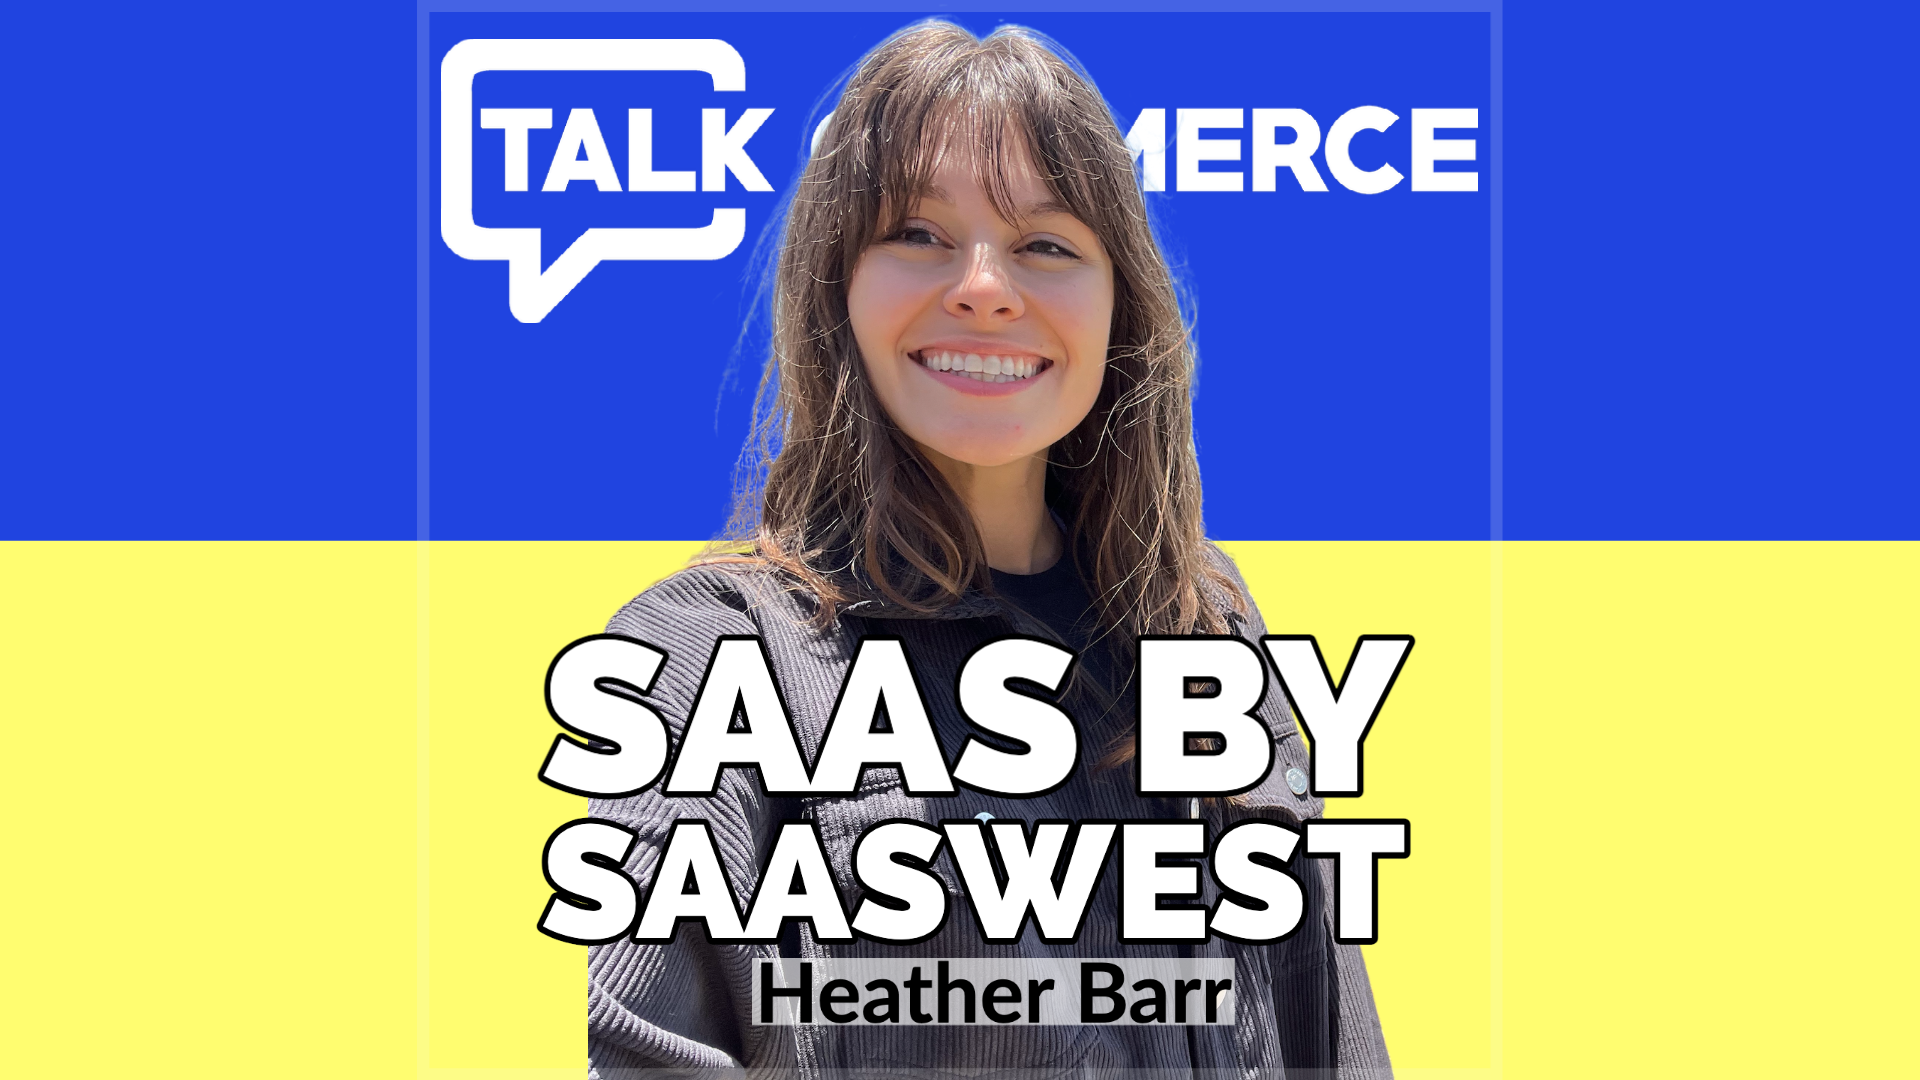 Talk-Commerce Heather Barr